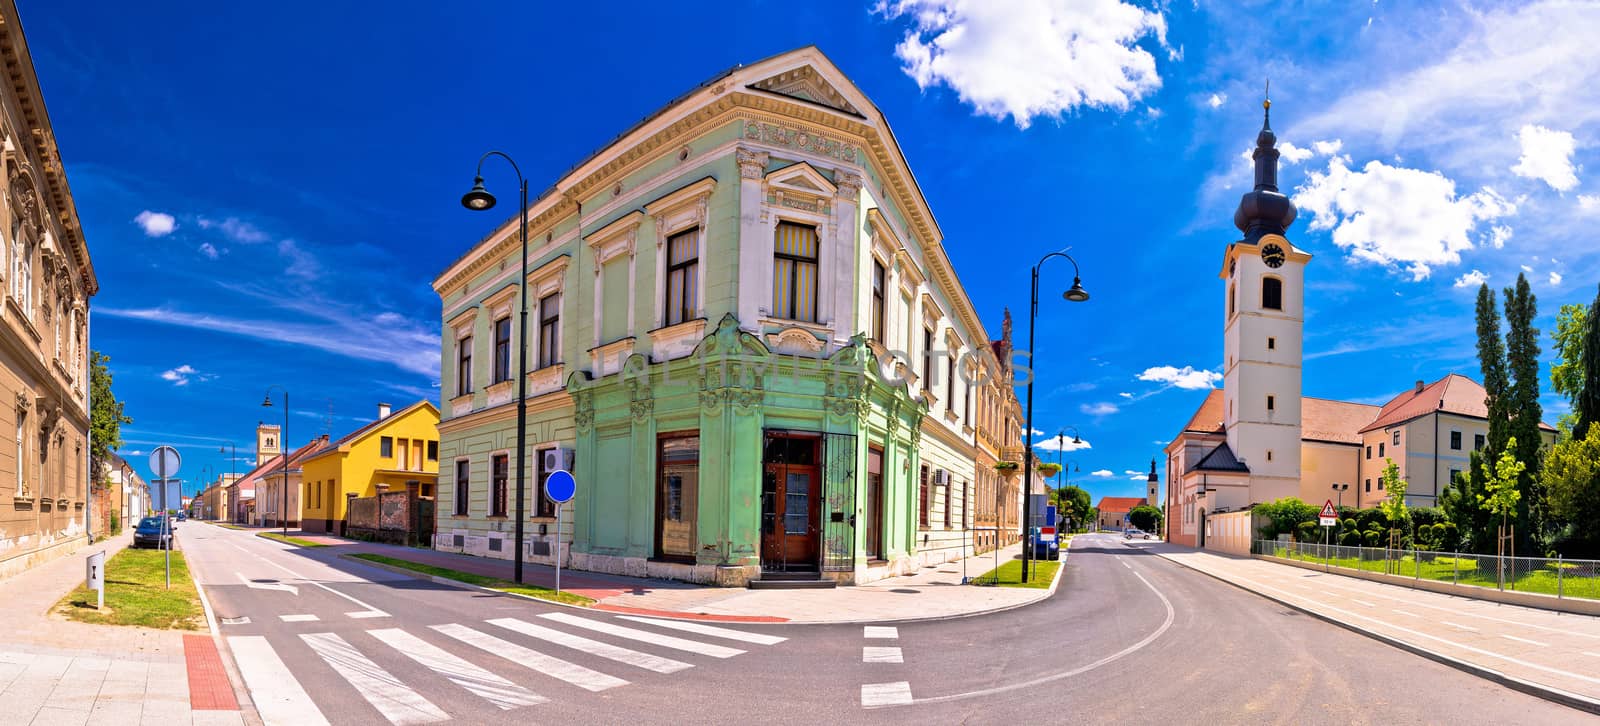 Town of Koprivnica old street view, Podravina region of Croatia